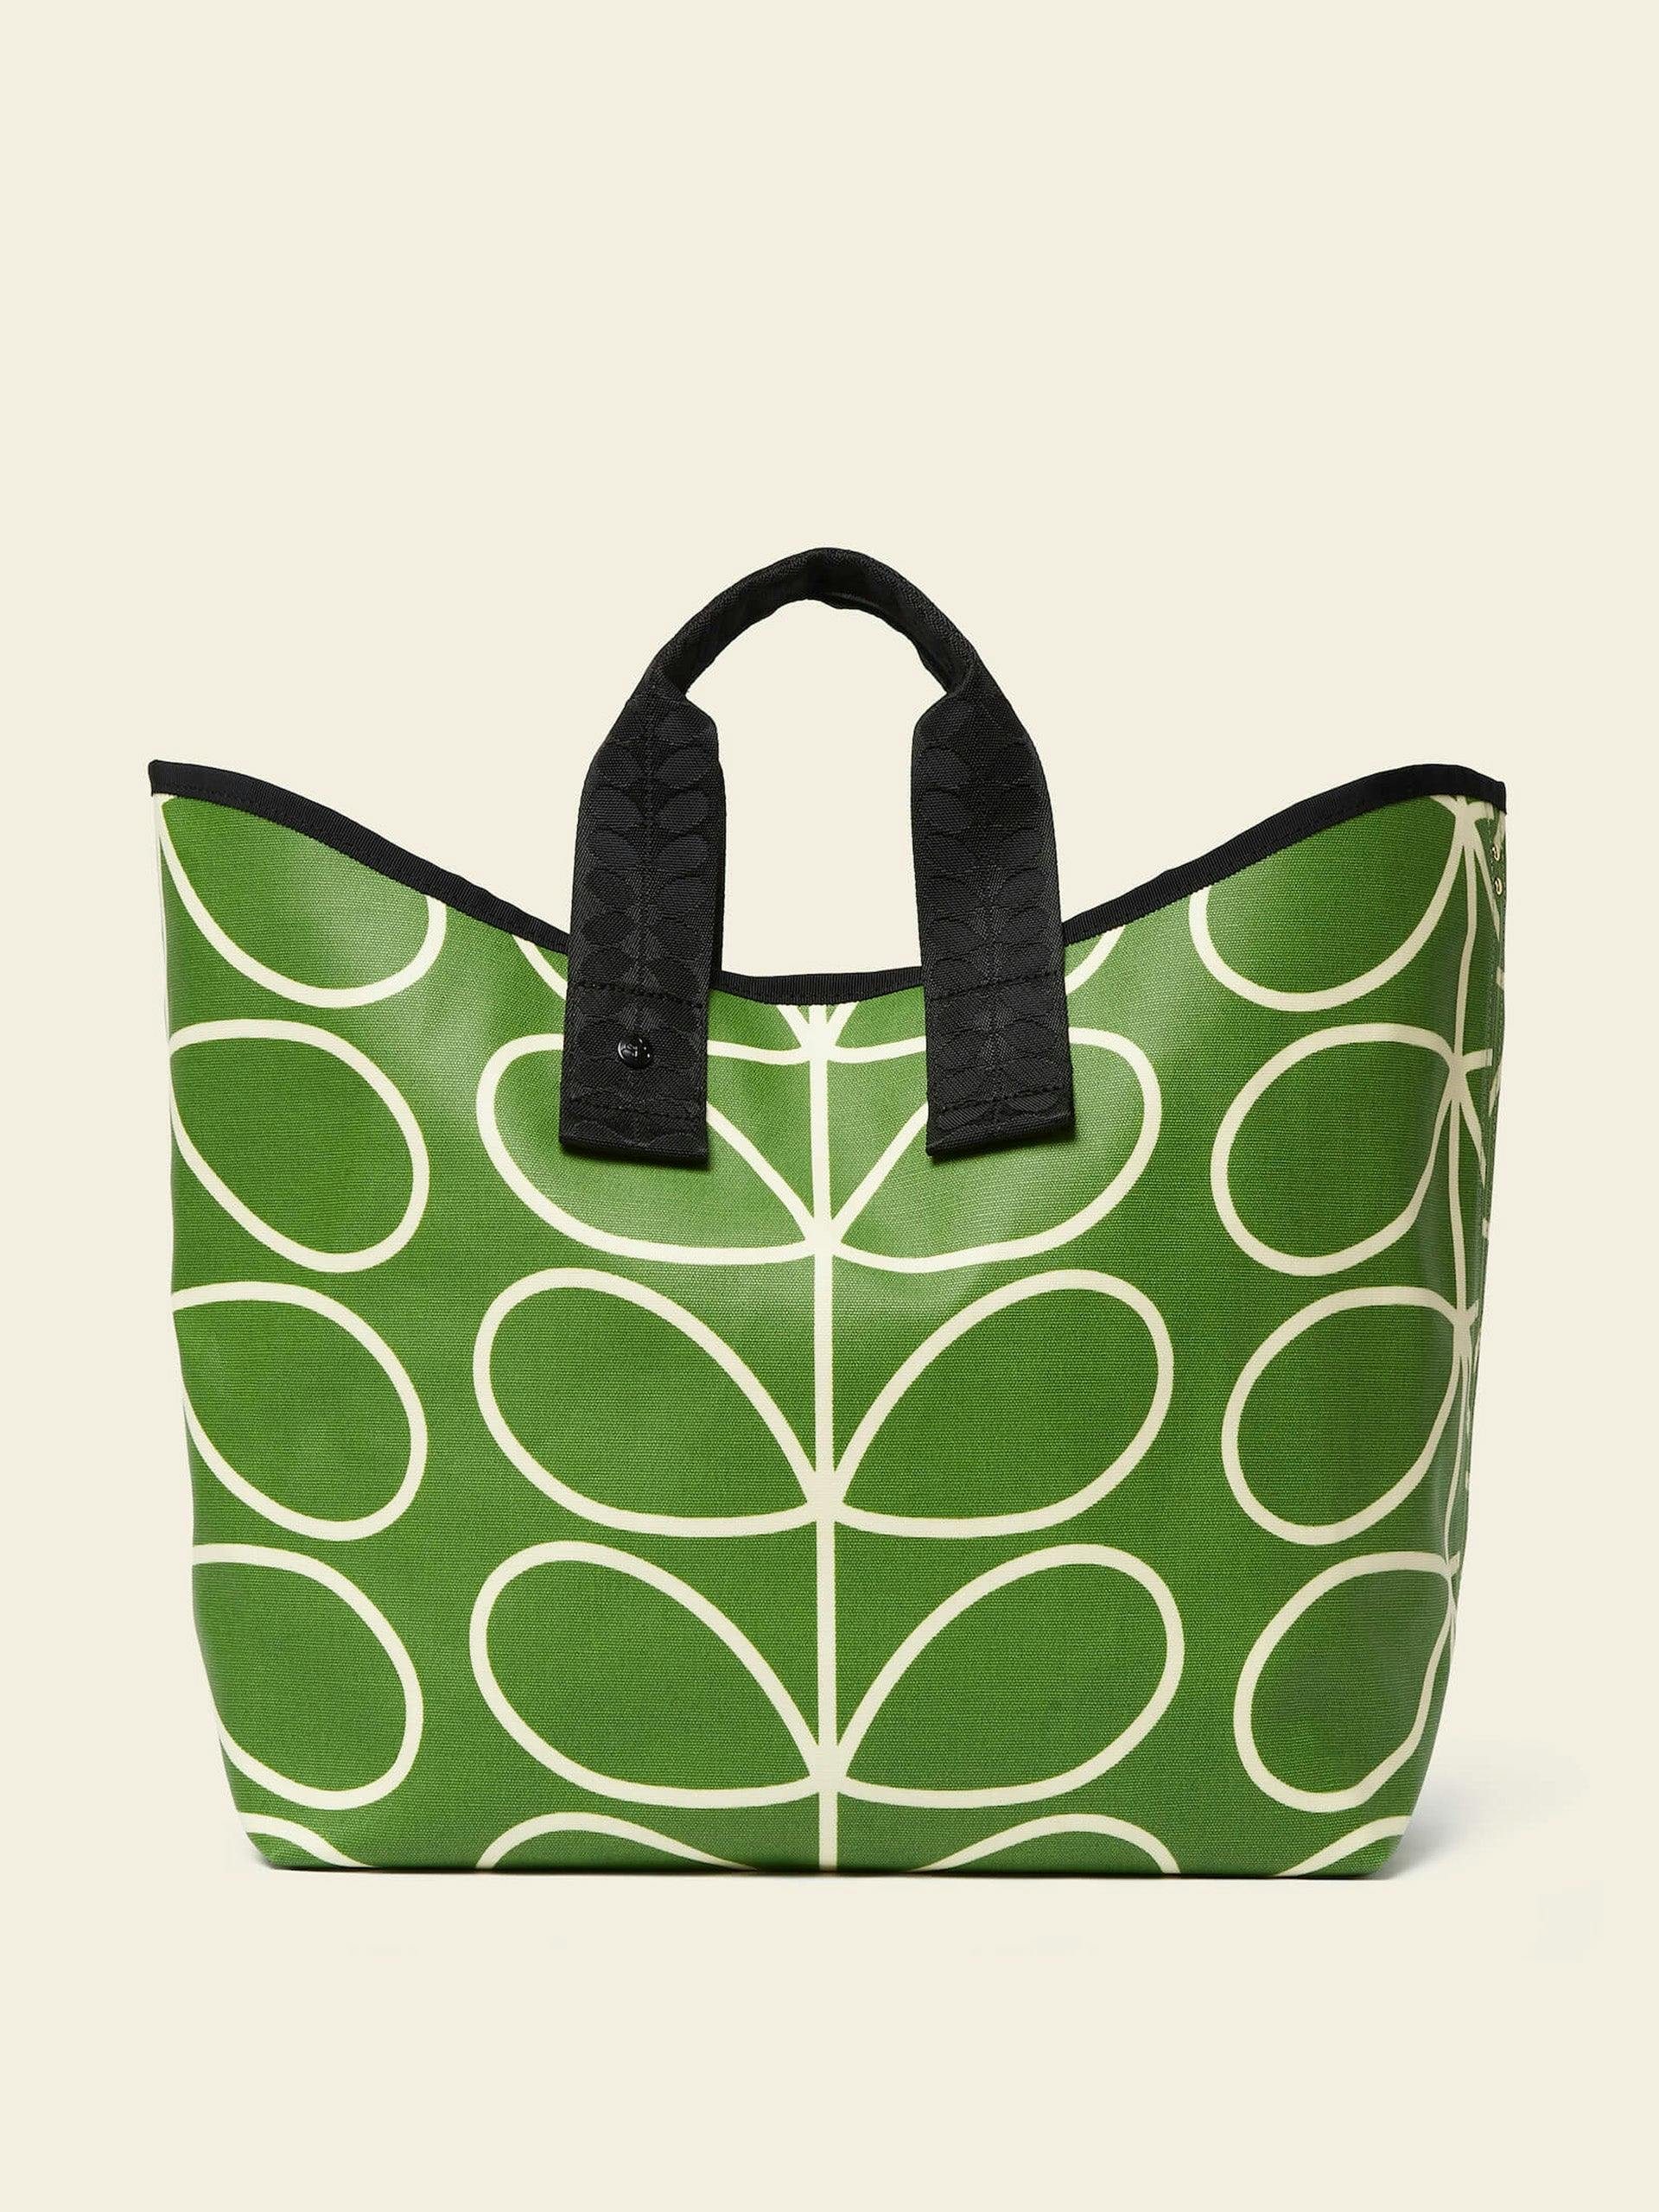 Carryall large green tote bag